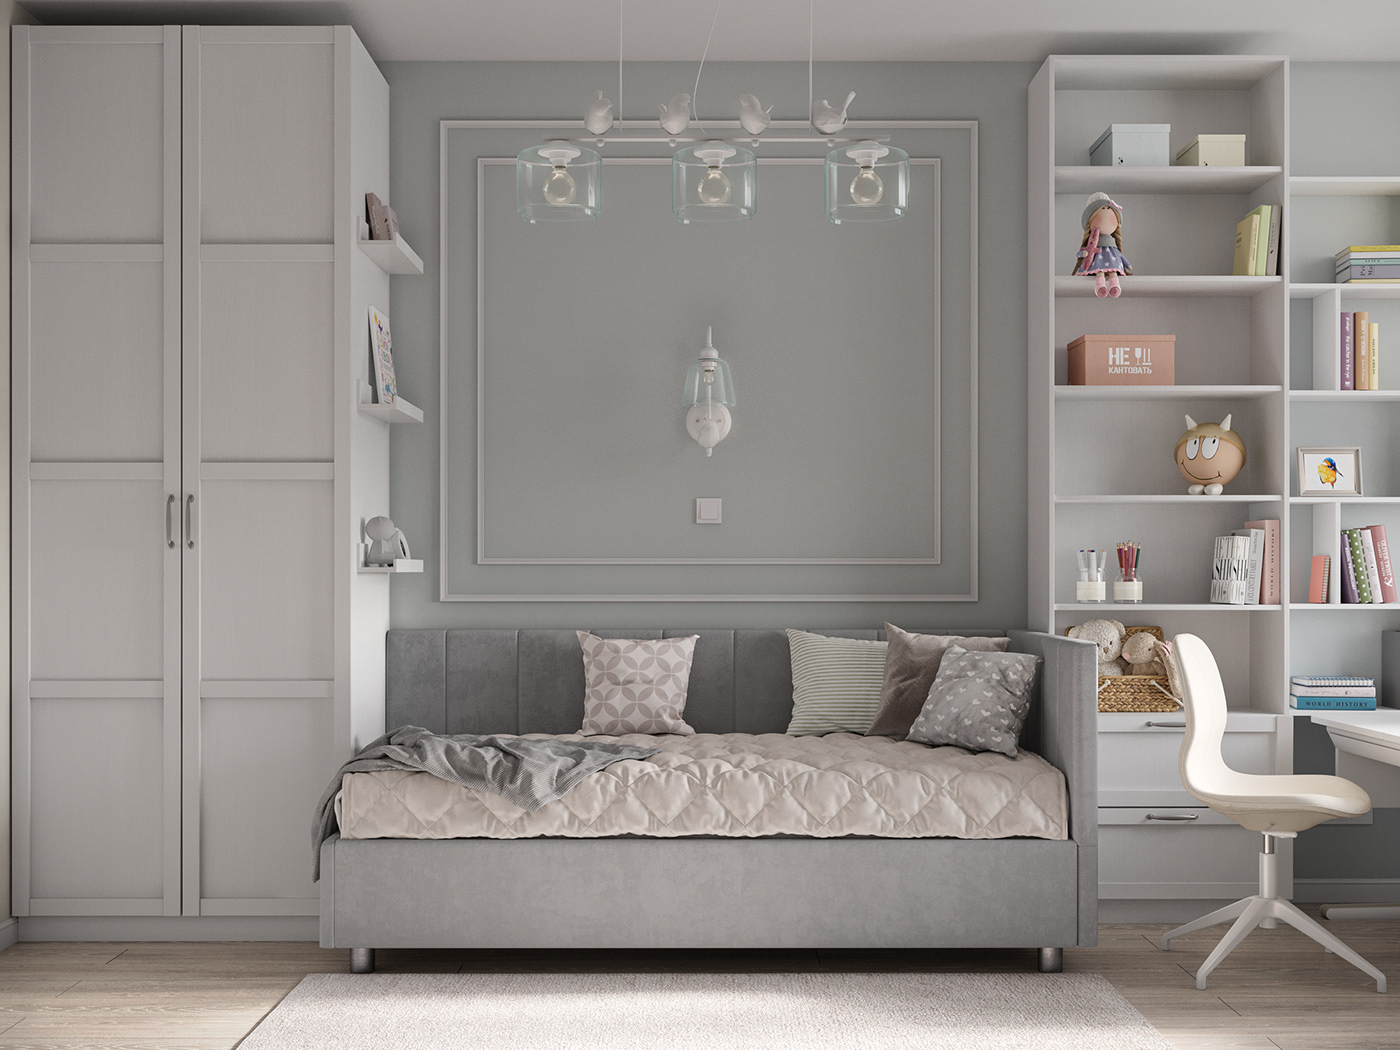 3dvisualization visualization interior design  3dviz bedroom cosy 3dmodeling girls 3Dvizualization kidsroom